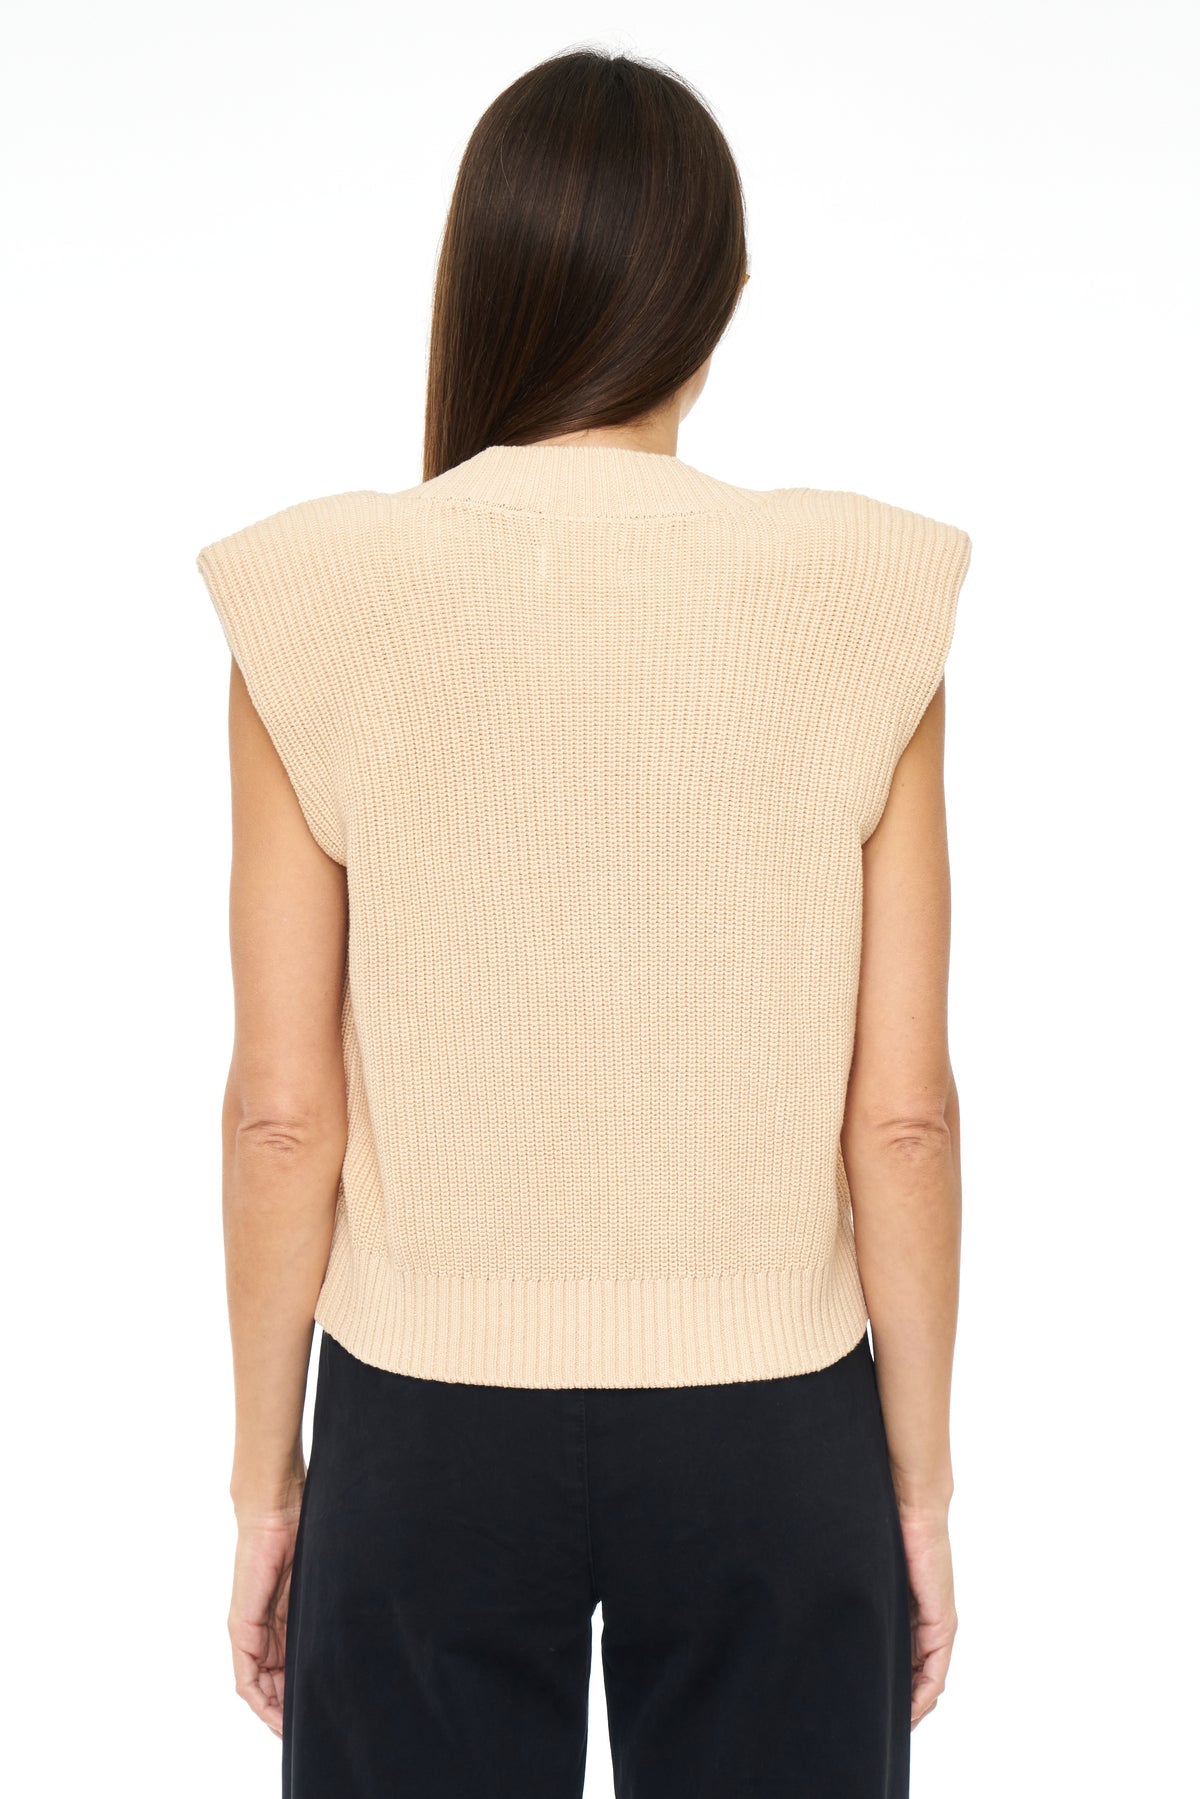 Bella Sleeveless Shoulder Pad Sweater - Back side